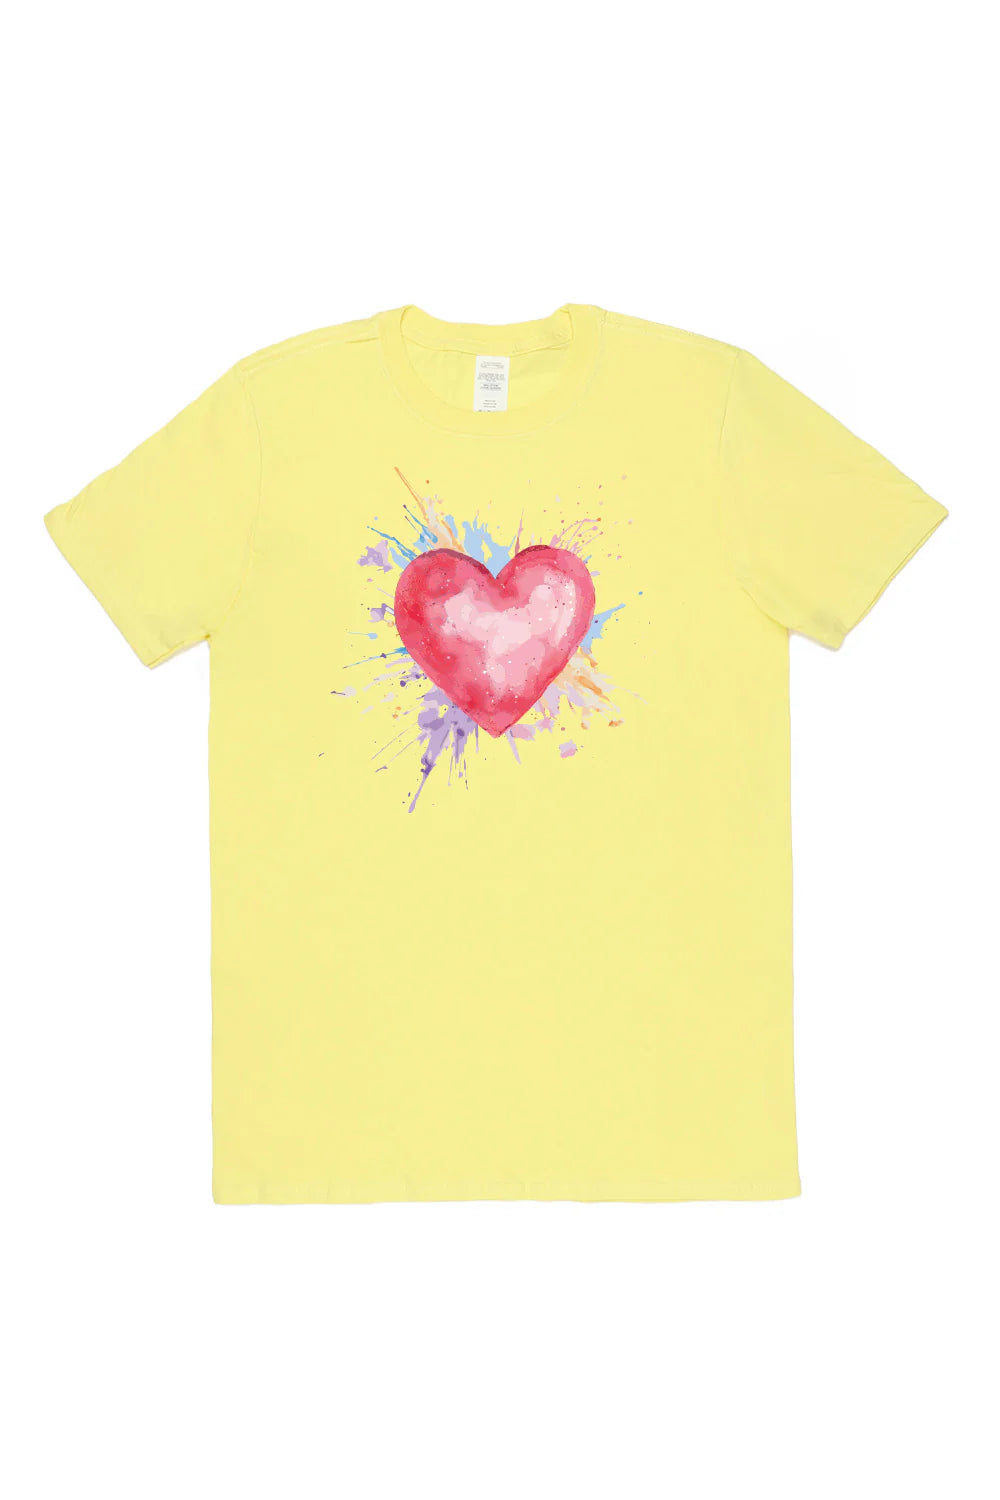 Heart With Pastel Splash T-Shirt